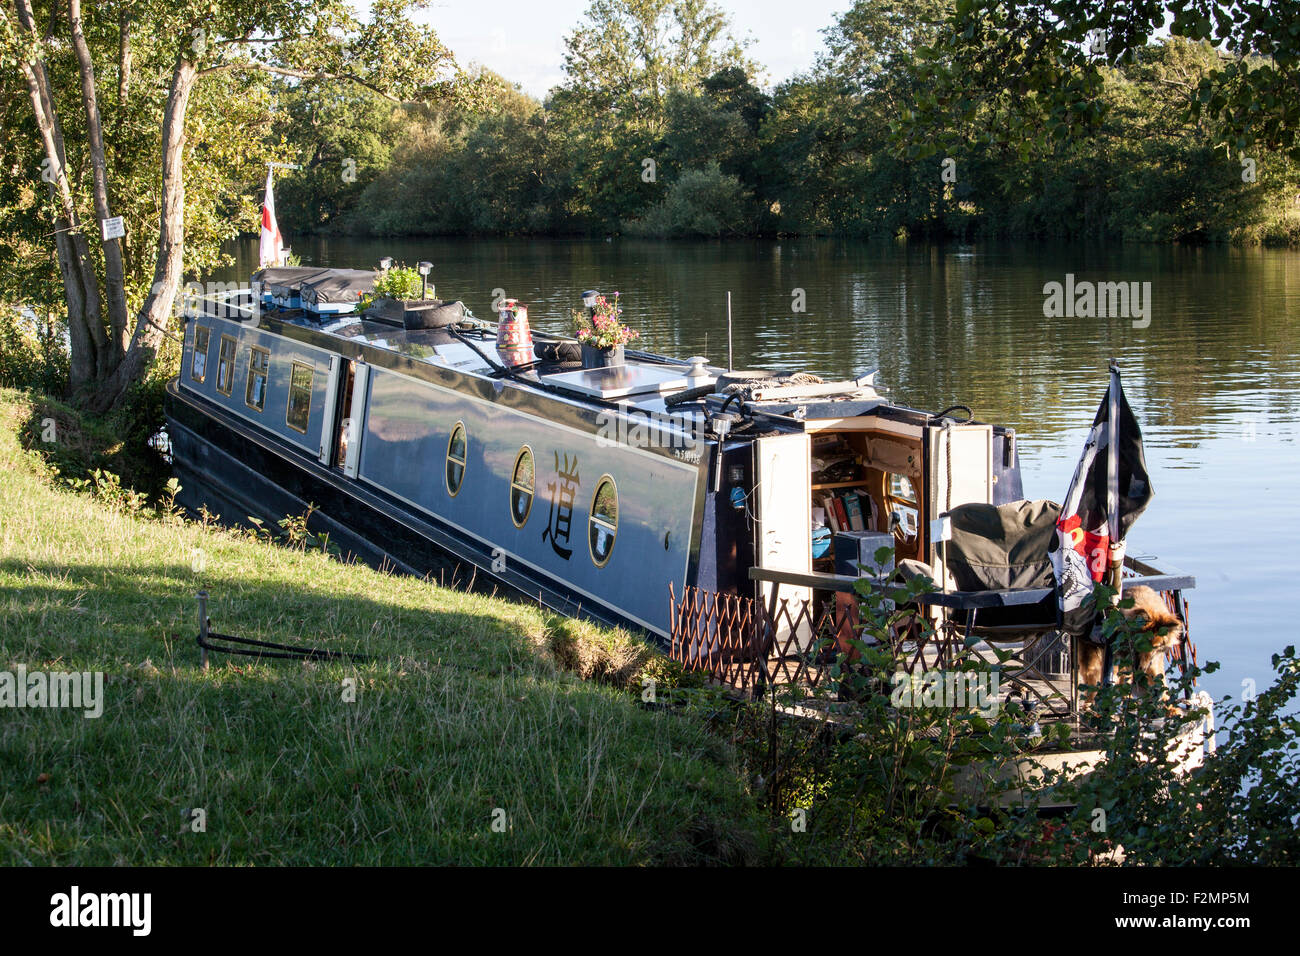 Narrowboat on the River Thames Stock Photo